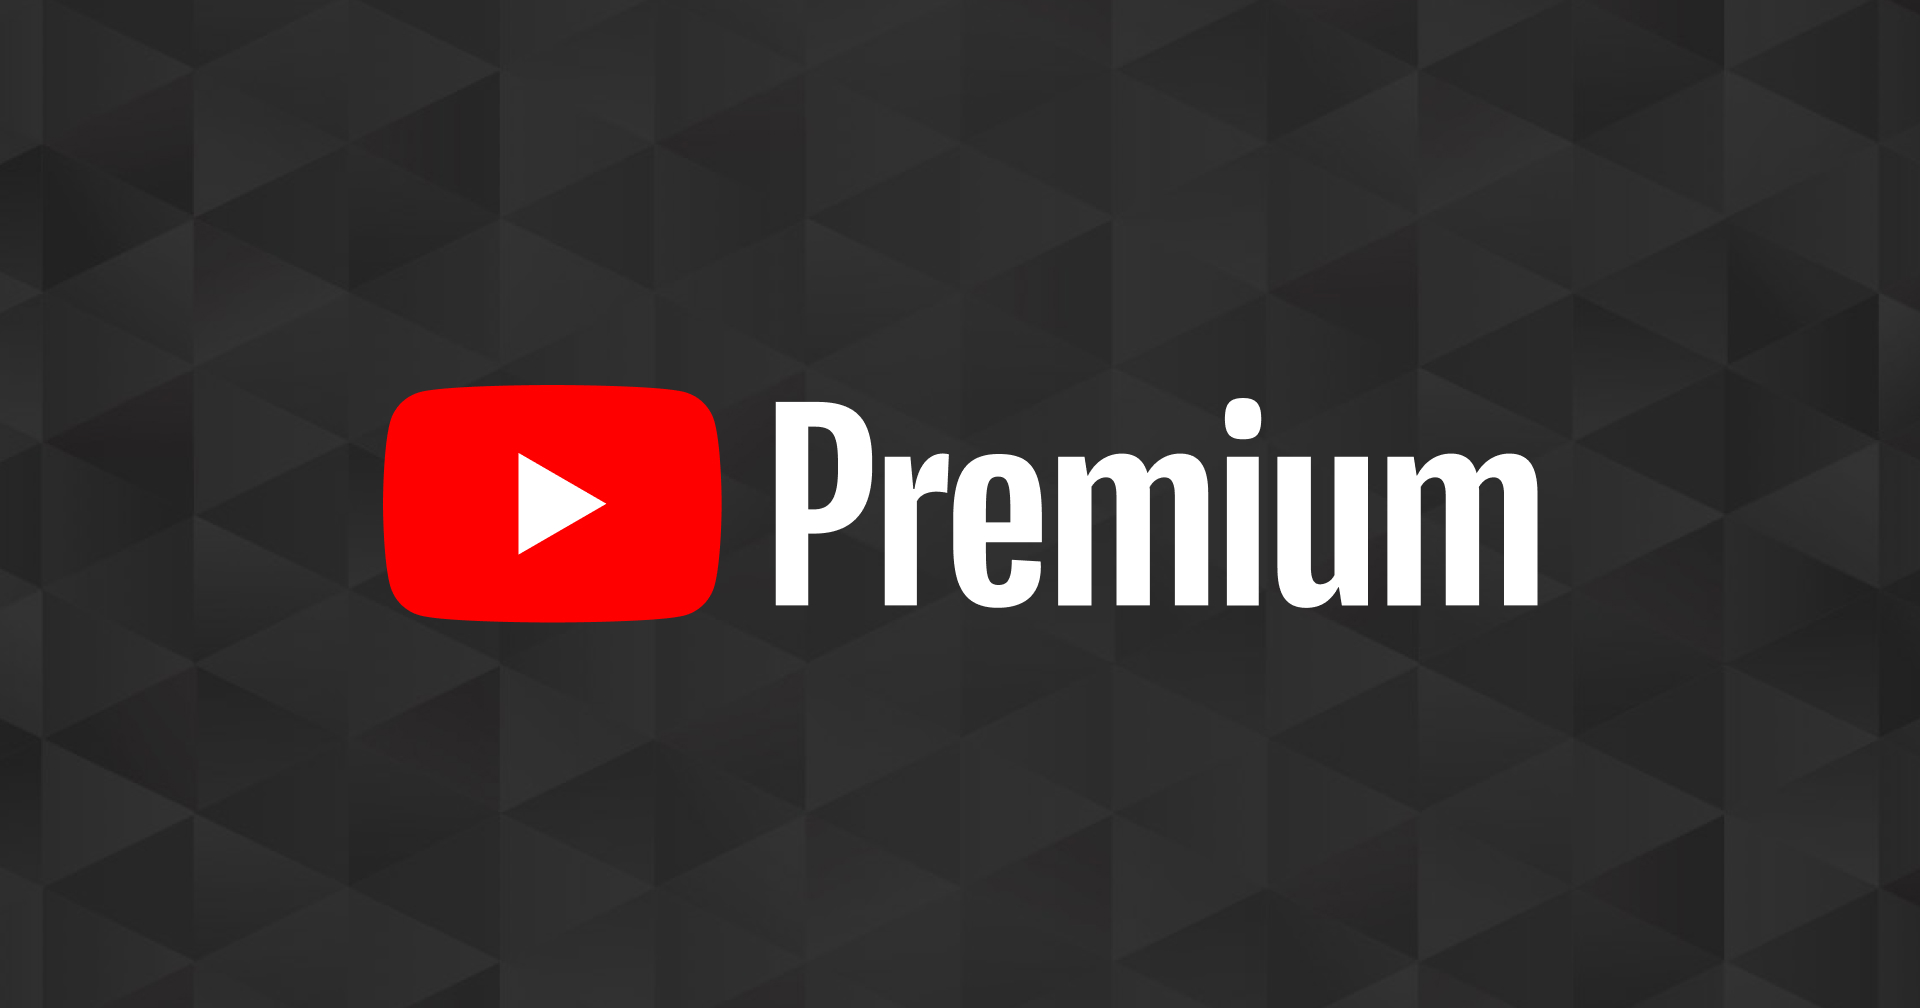 YouTube Premium เปิดแพ็กรายปี สมัครด่วนภายใน 23 ม.ค. ประหยัดไปหลายบาท